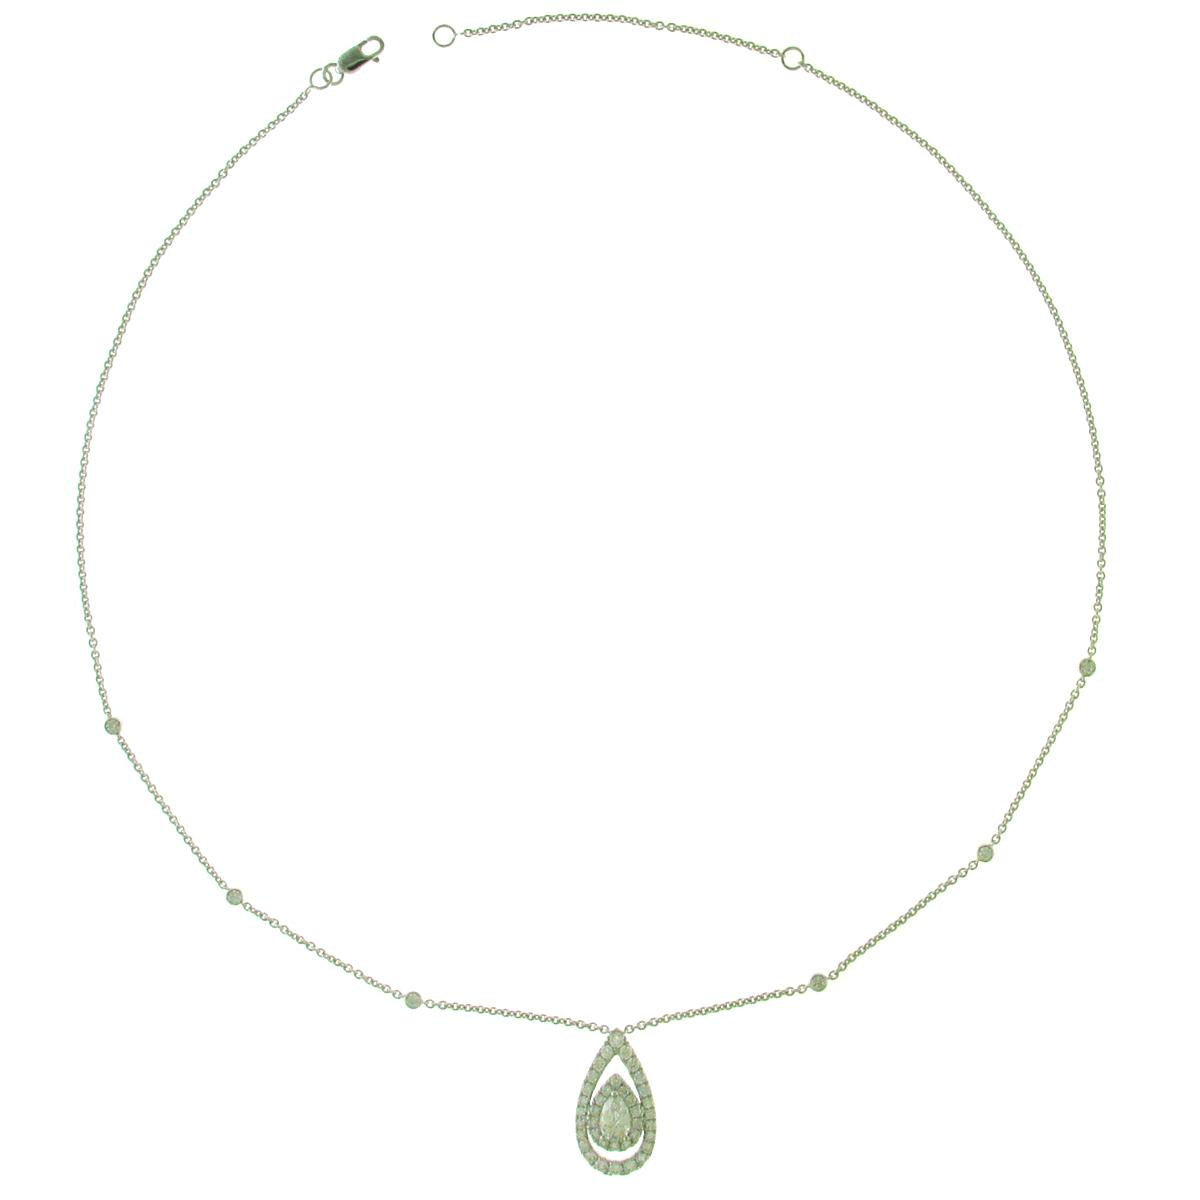 1.47ctw Pear Shape Halo Diamond Pendant Necklace